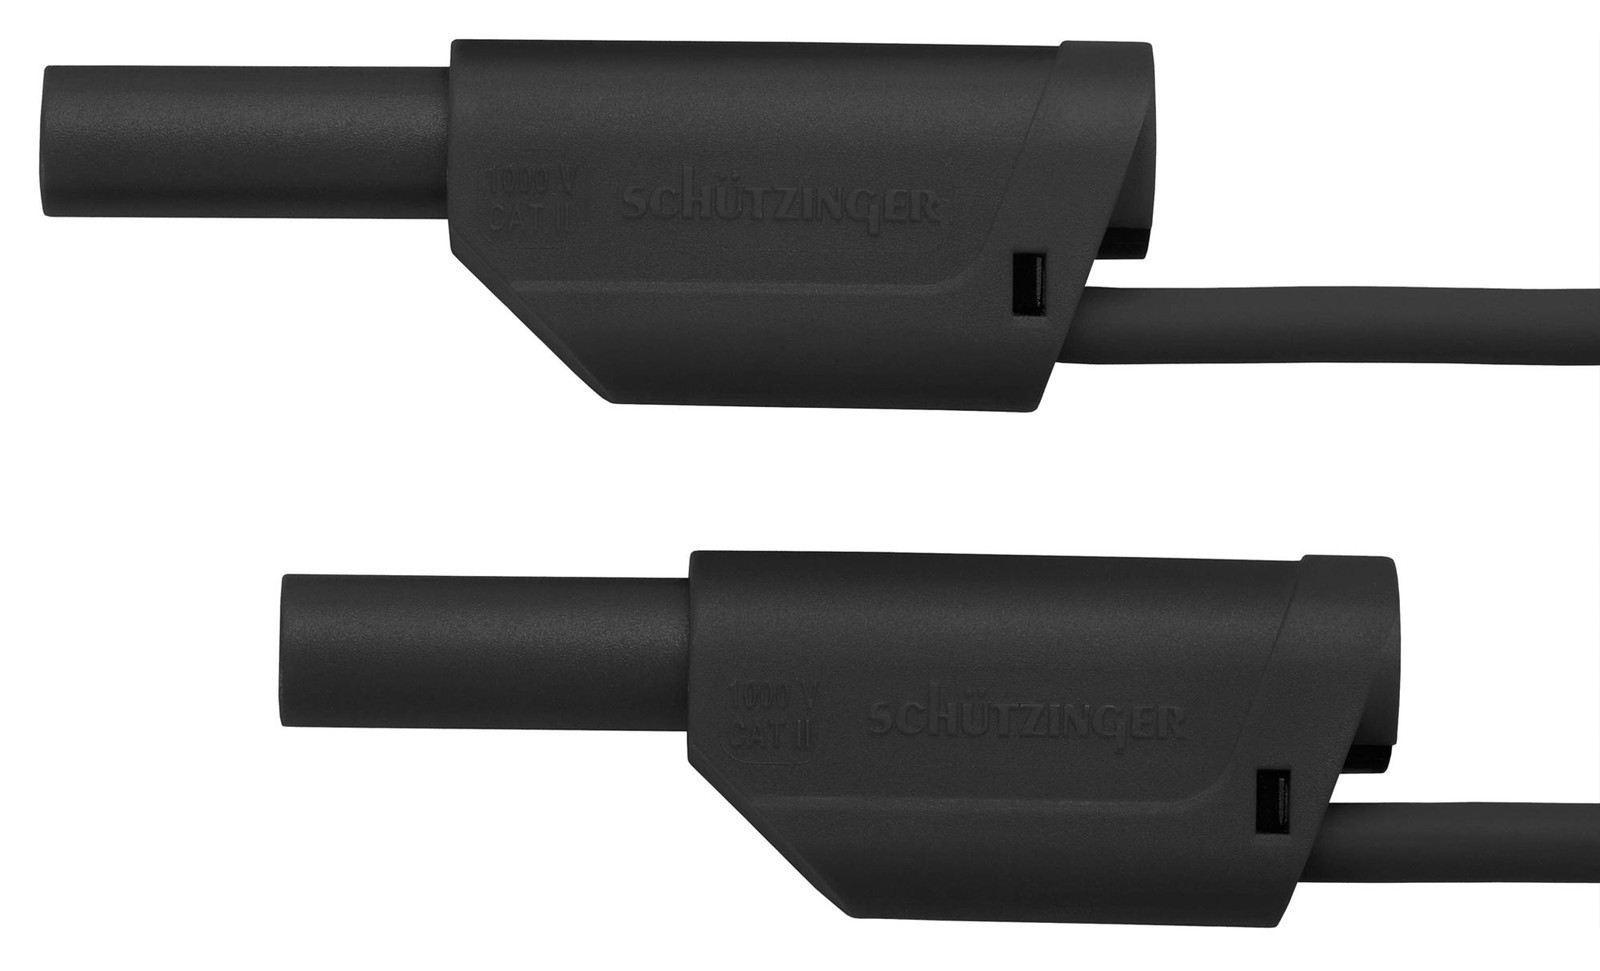 Schutzinger Vsfk 6000 / 2.5 / 50 / Sw Test Lead, Stackable Banana Plug, 500mm